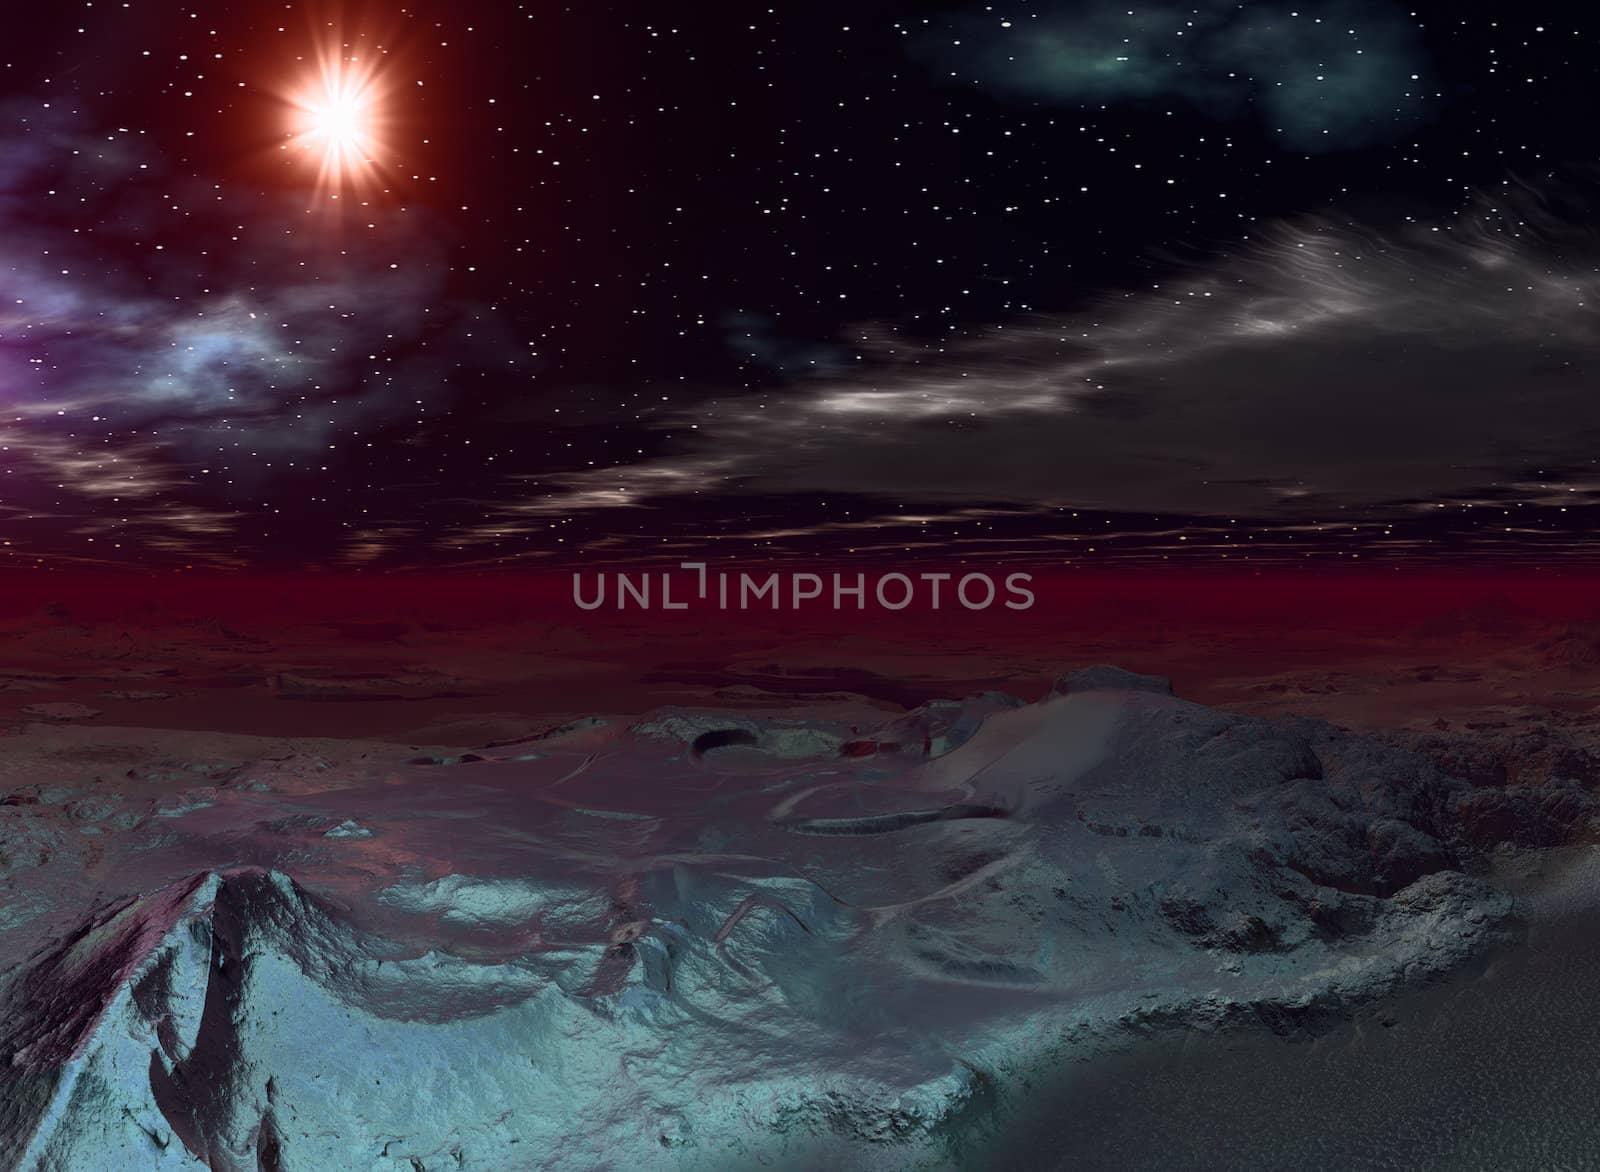 View of an alien landscape by gorgrigo